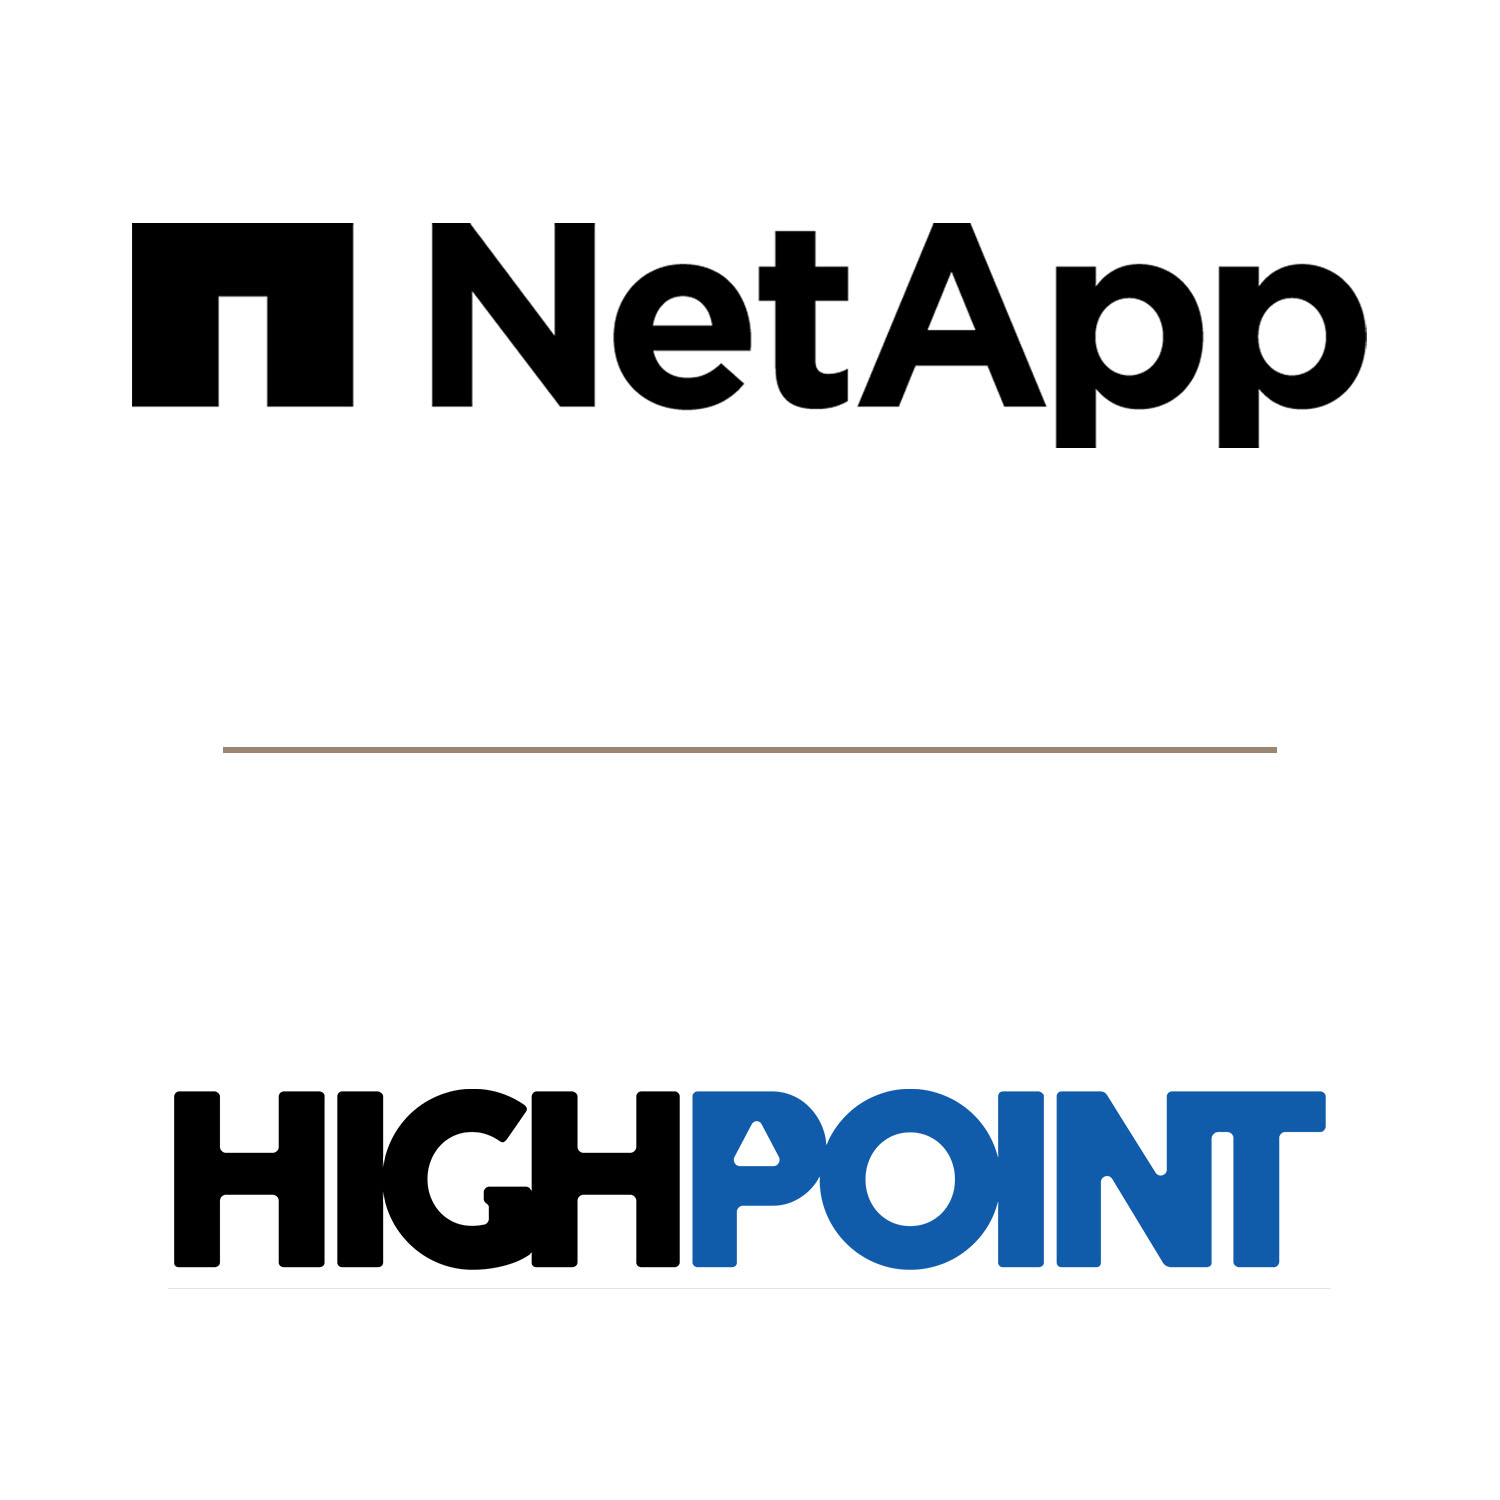 NetApp and HighPoint's logo